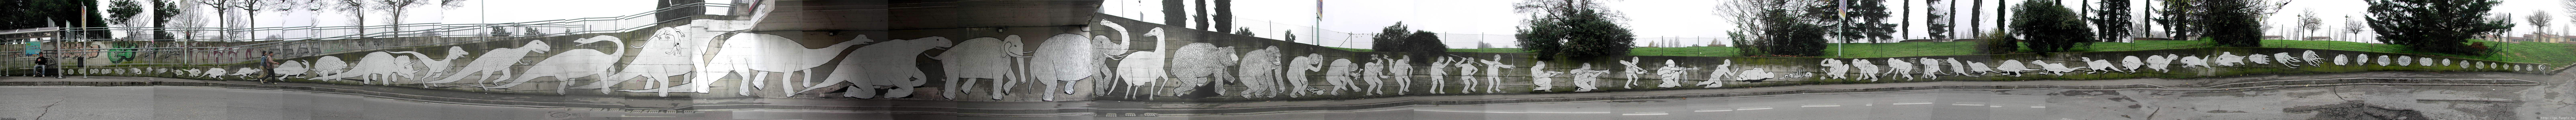 evolution_graffiti.jpg